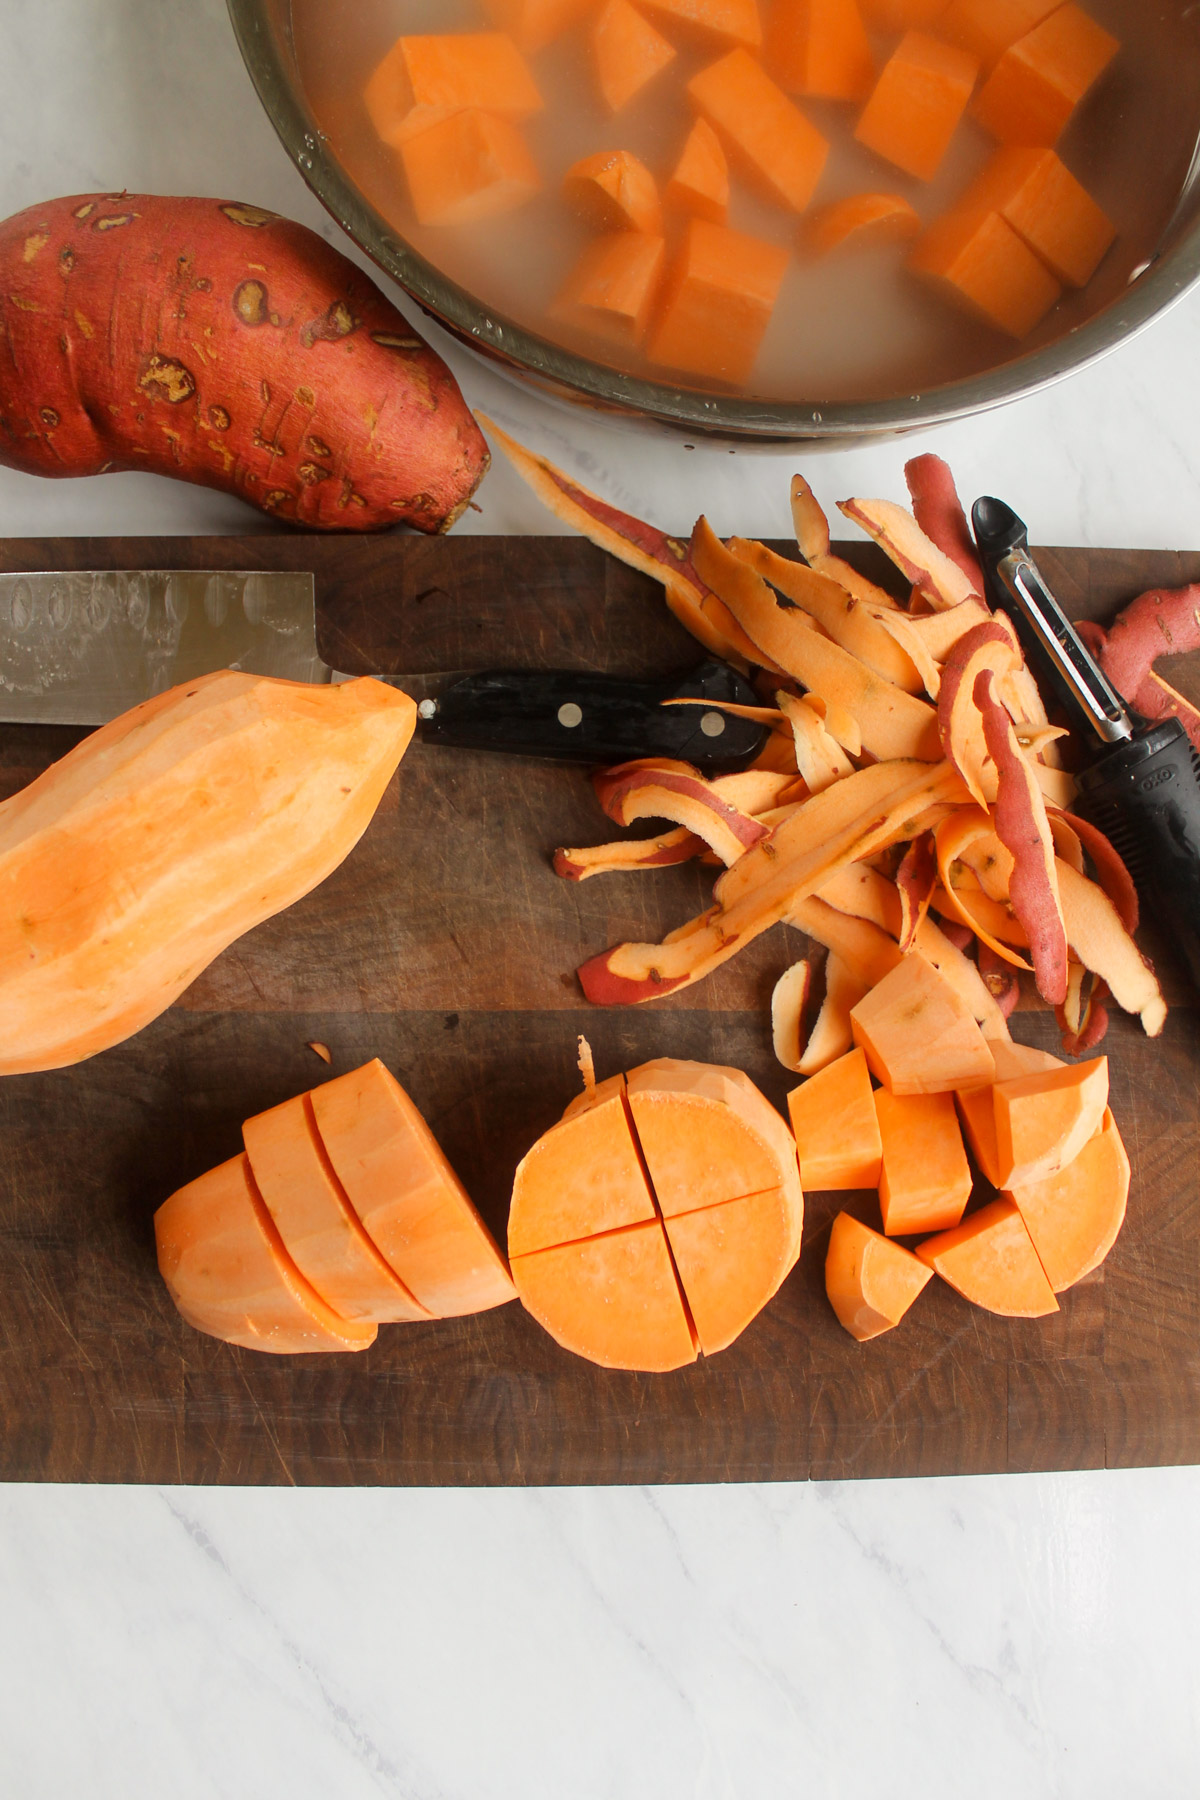 Peeling and chopping sweet potatoes on a cutting board.